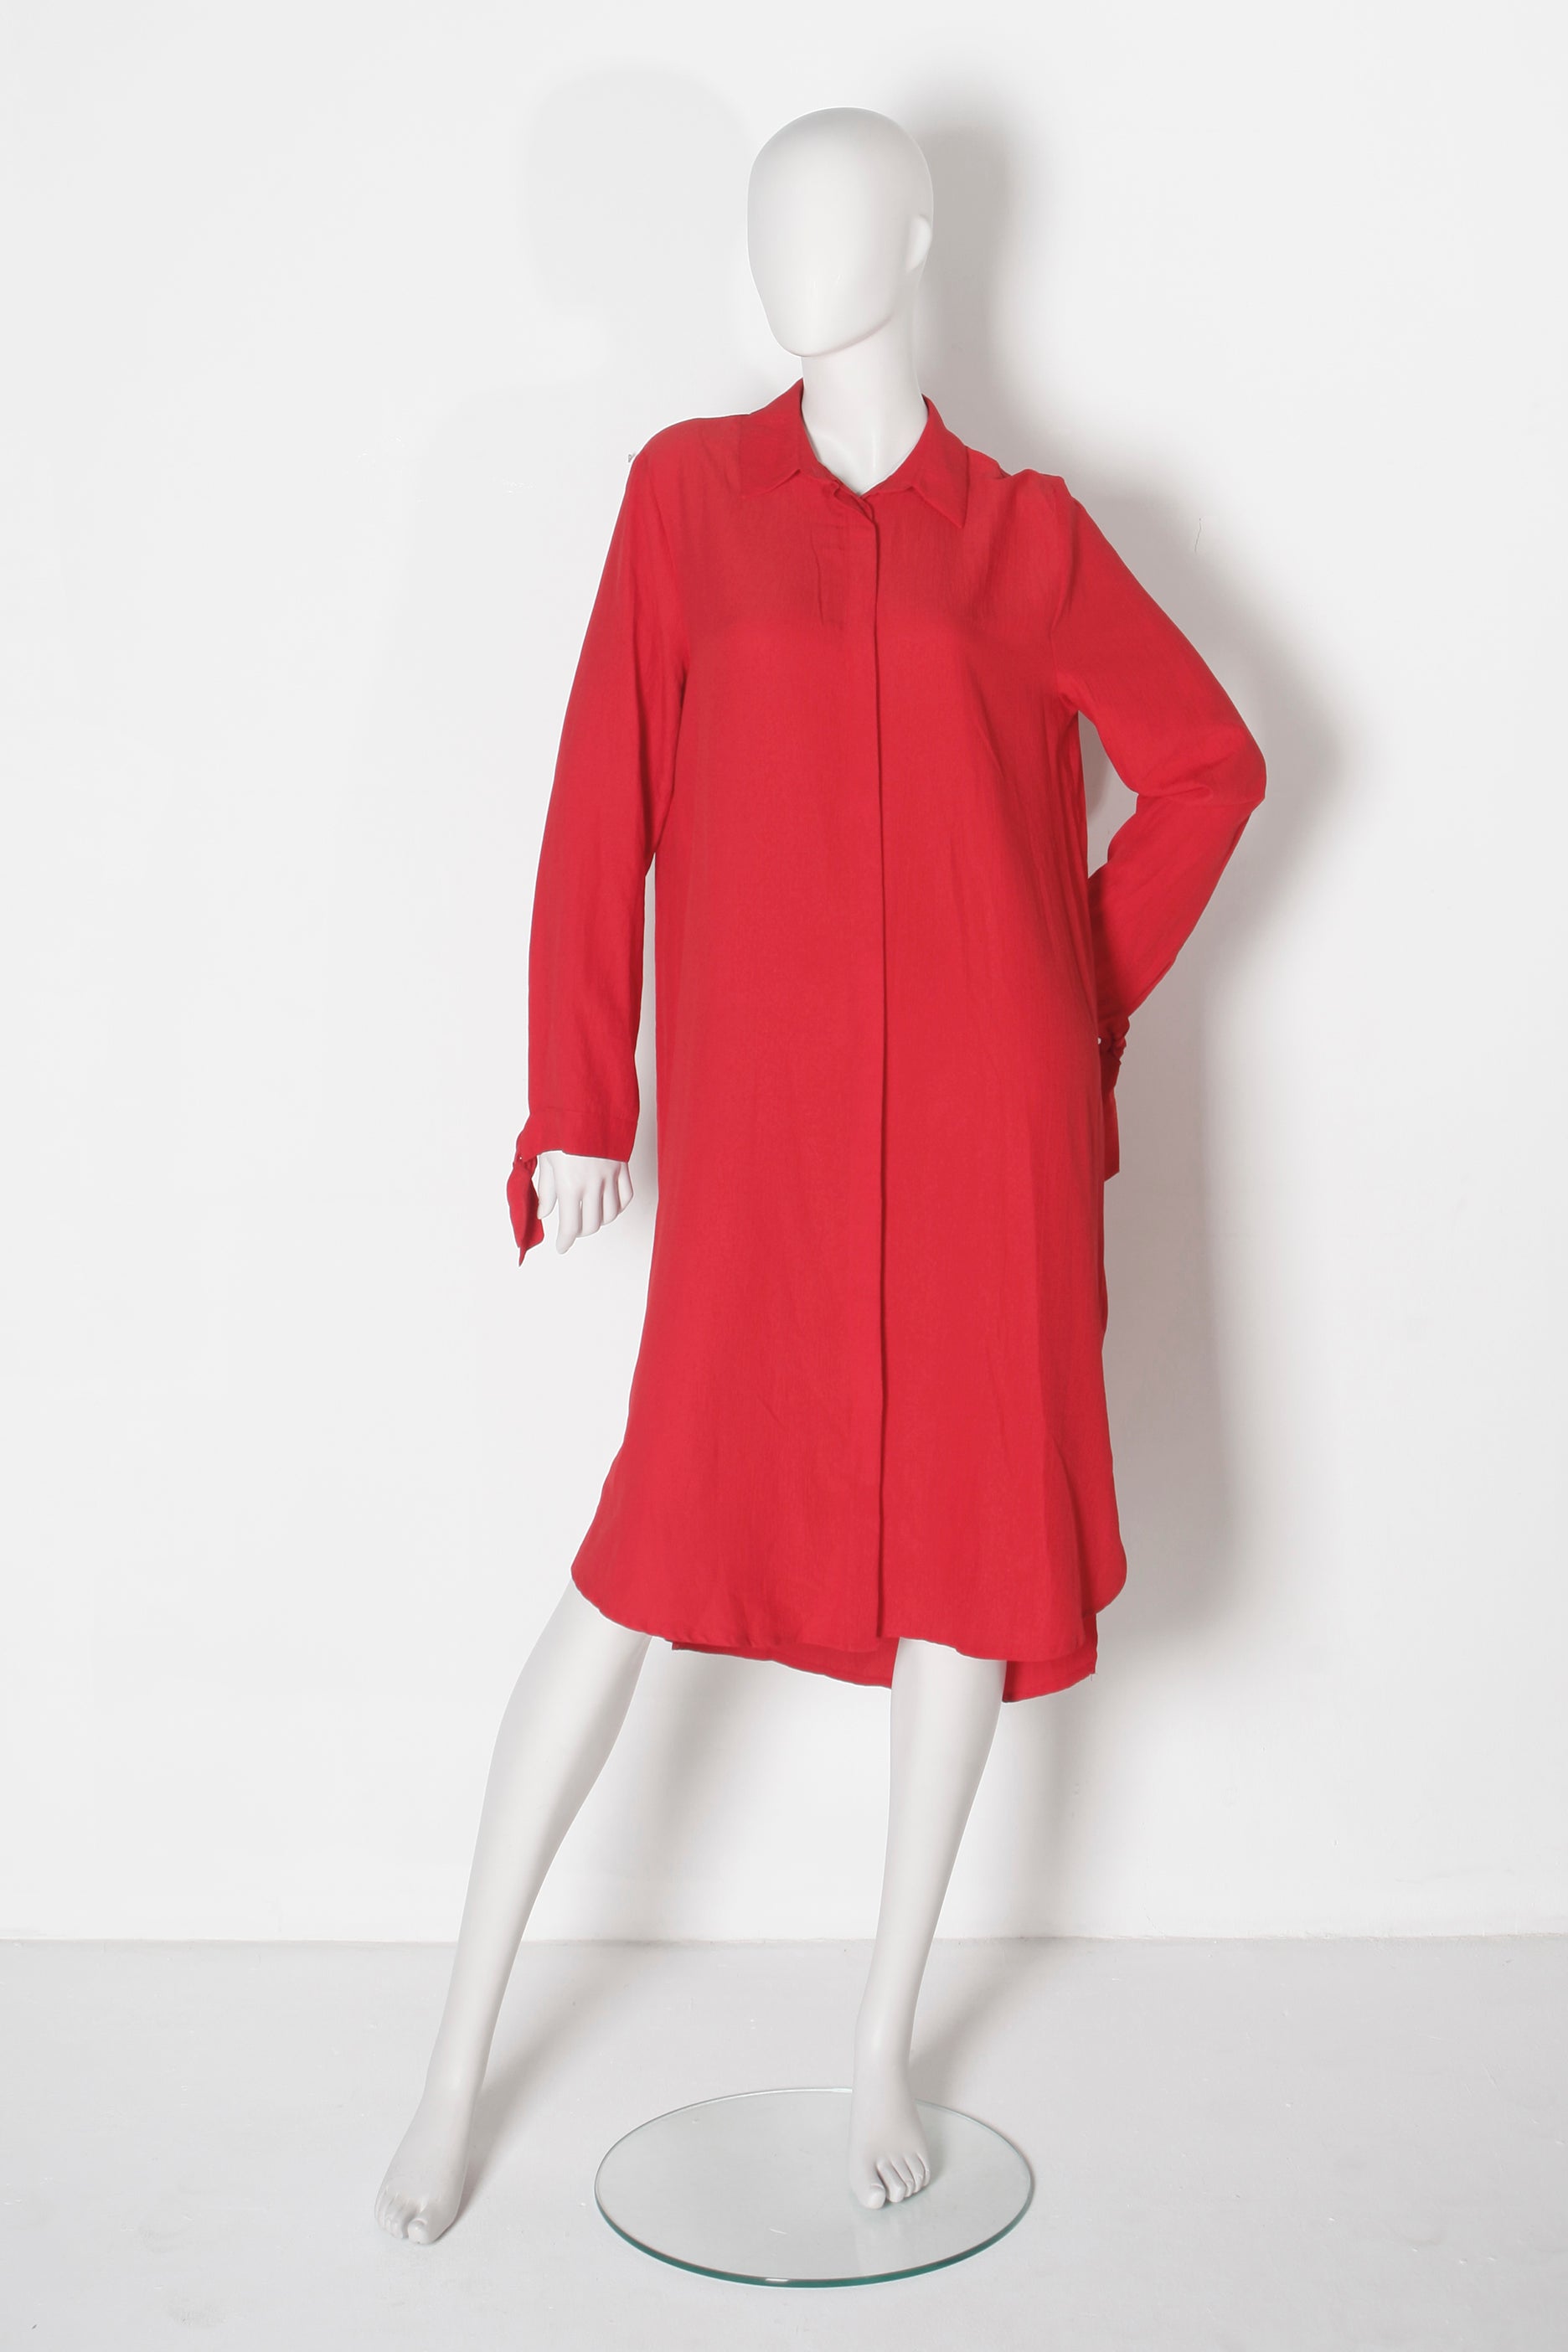 Red Shirt Dress (medium)